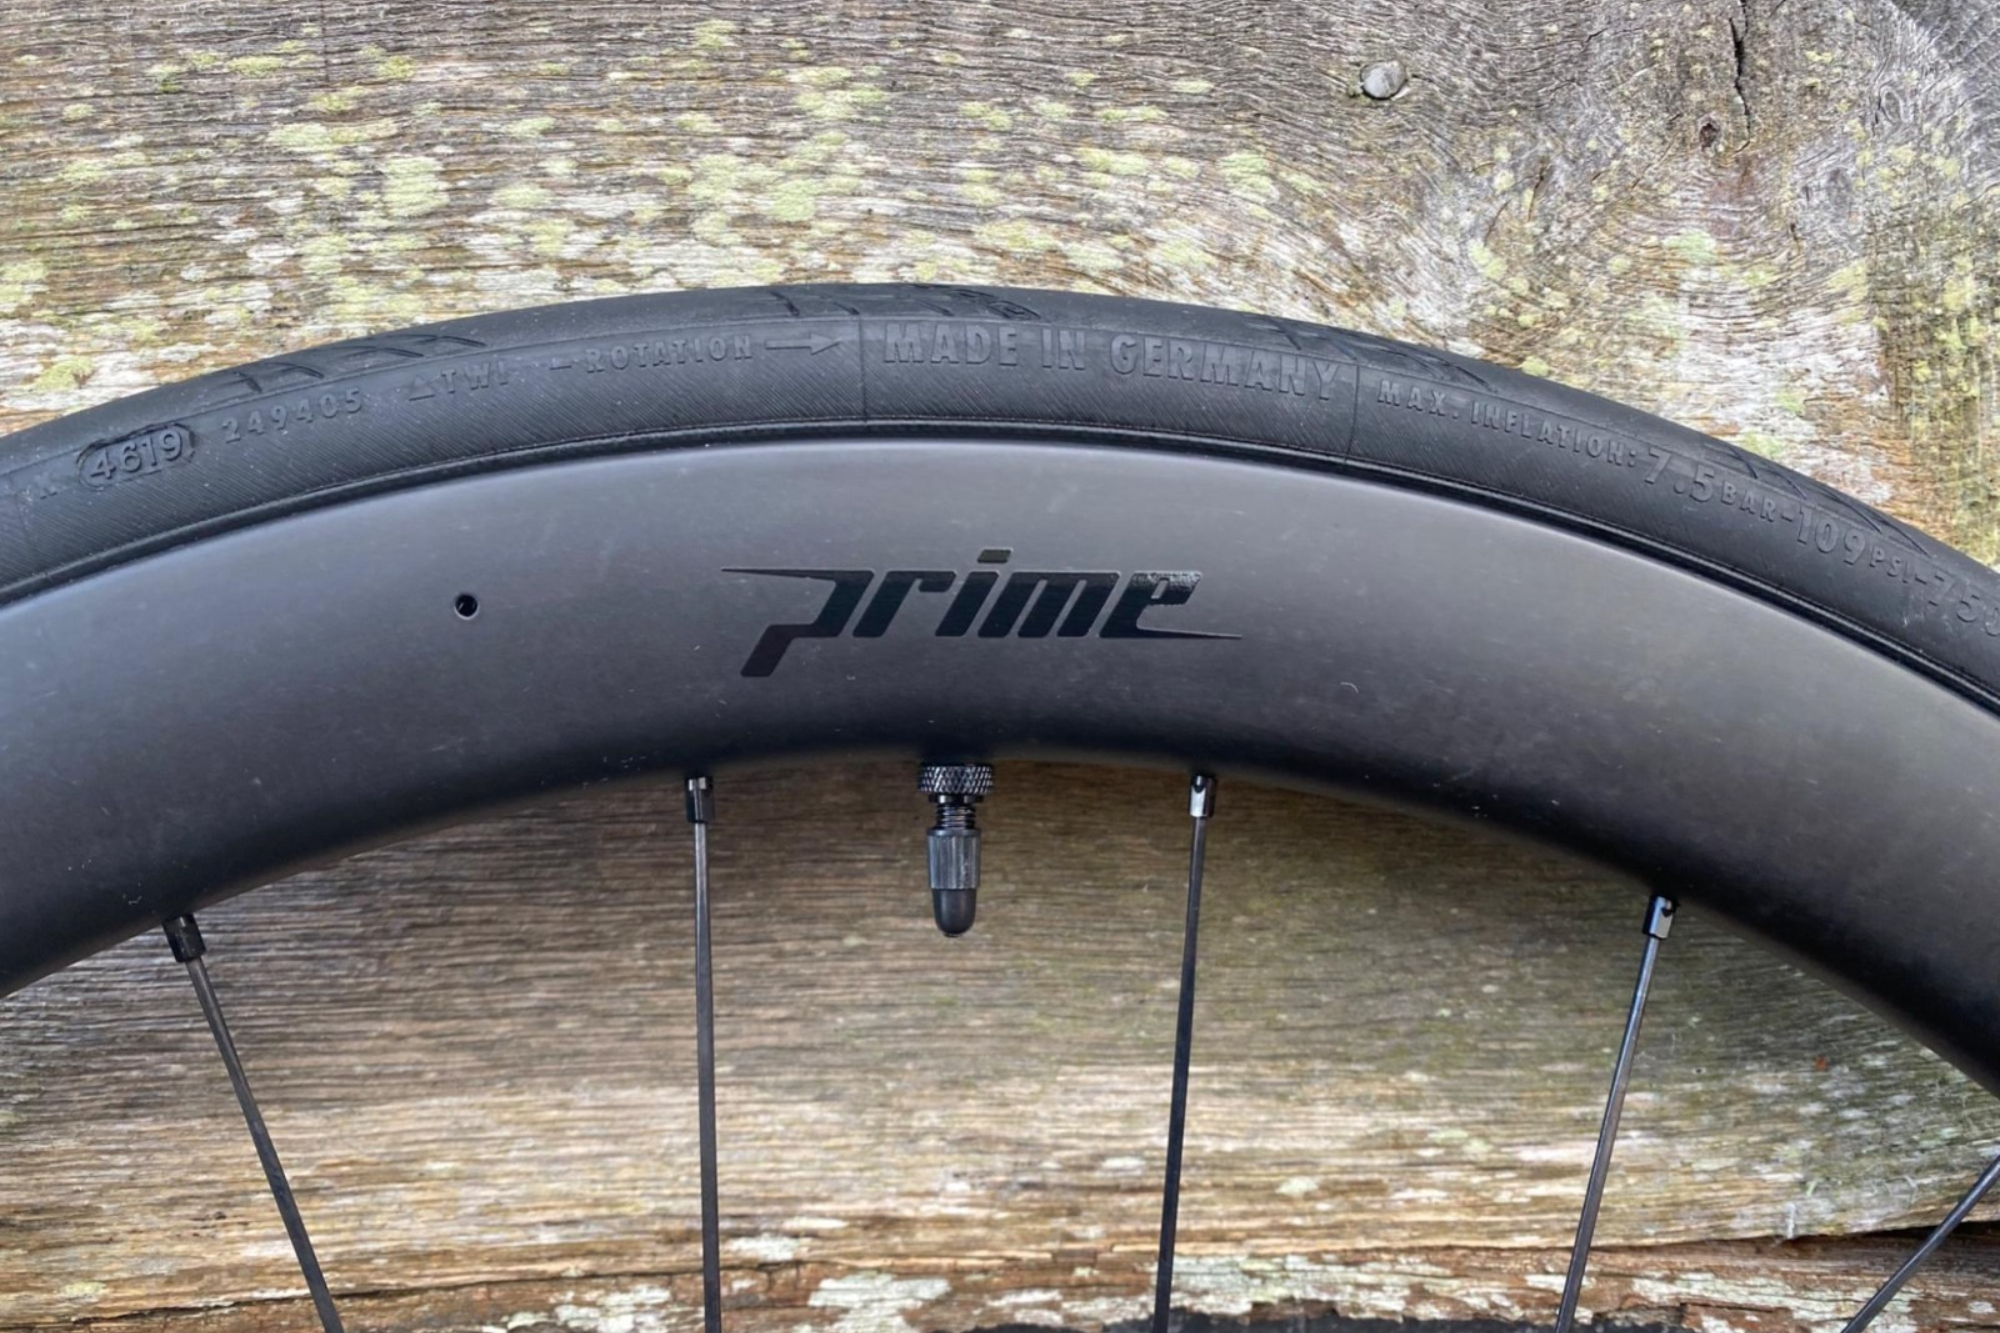 Image shows Prime Primavera 44 road wheels